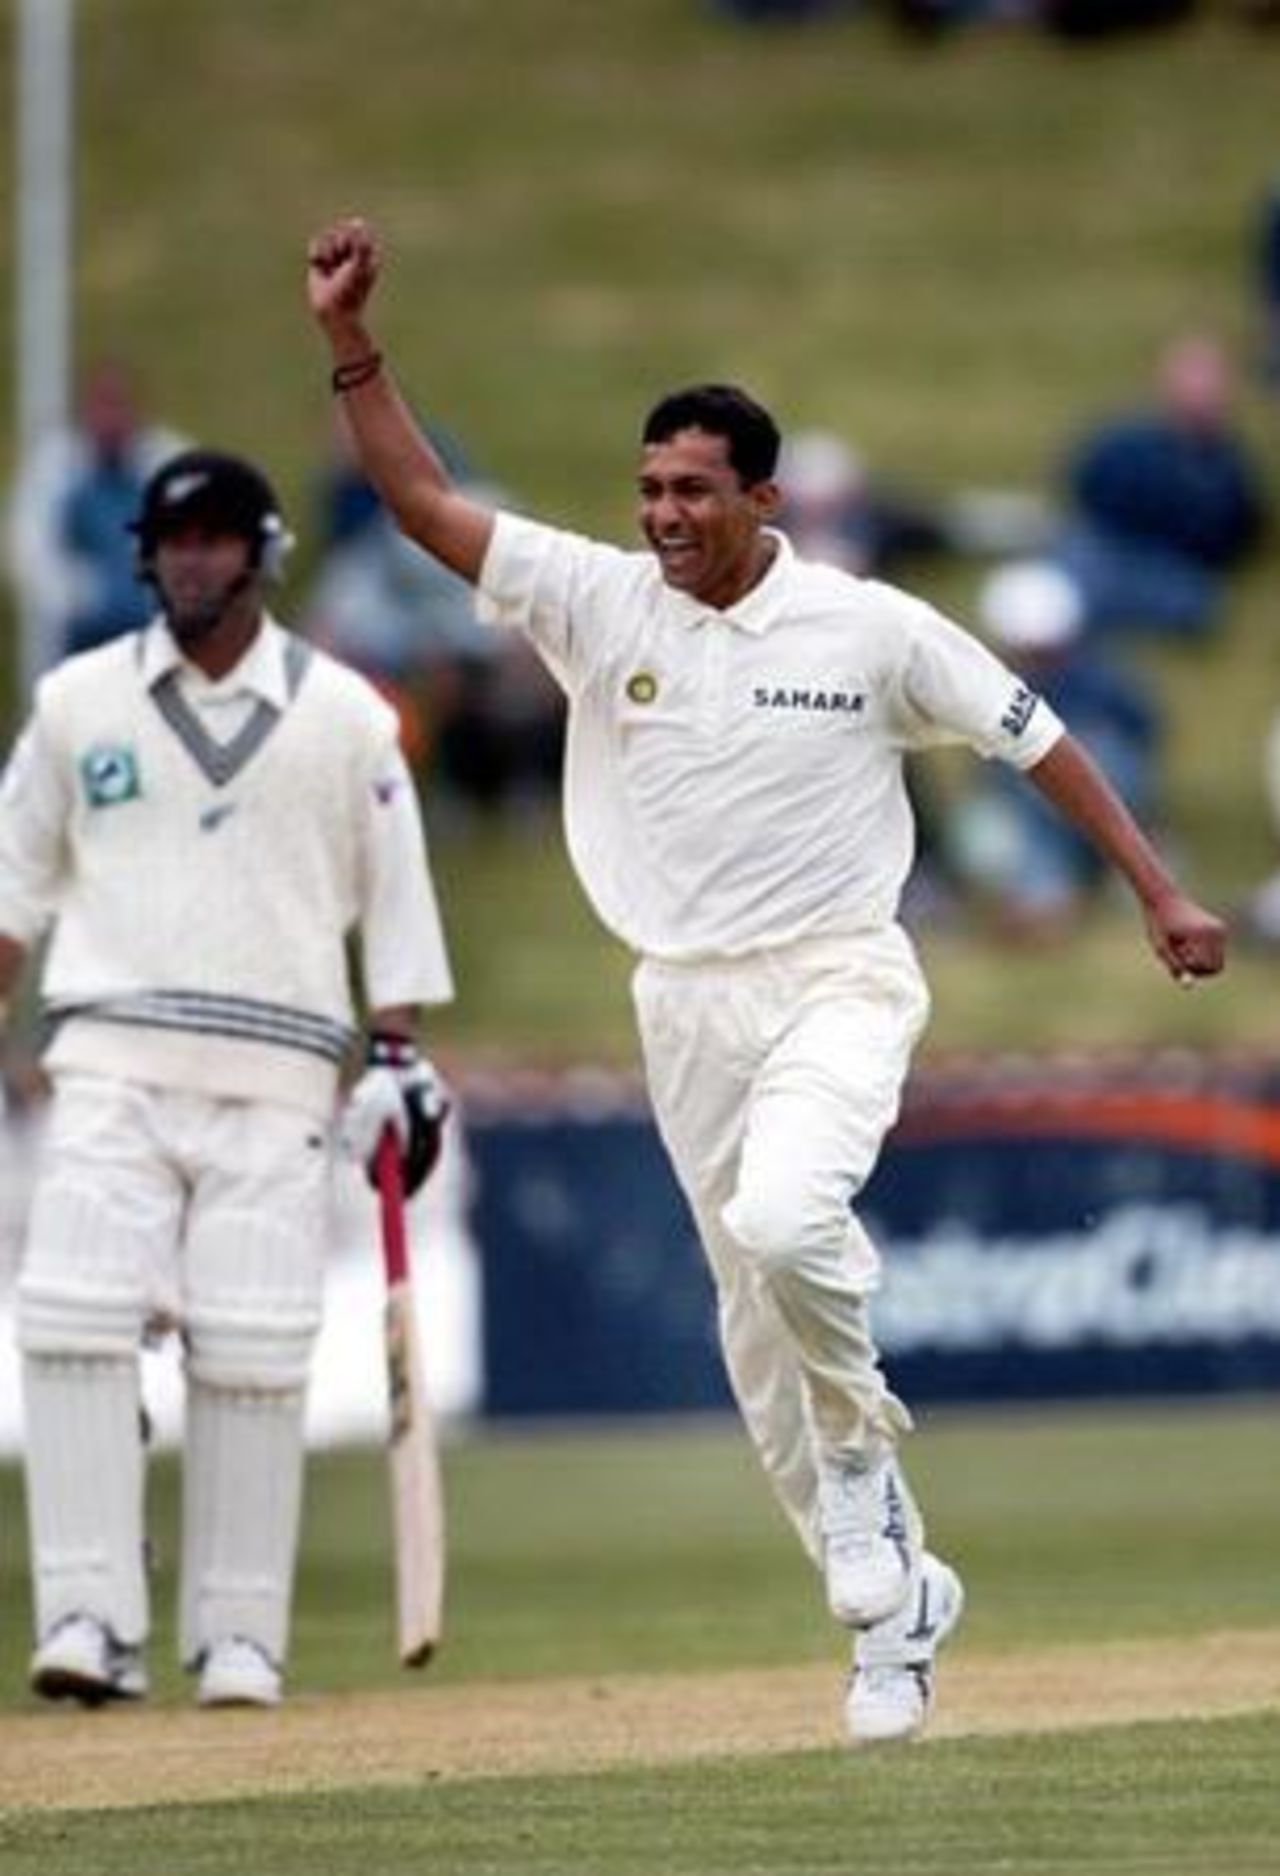 Indian bowler Sanjay Bangar celebrates the dismissal of New Zealand batsman Lou Vincent, caught by wicket-keeper Parthiv Patel for 12. Non-striking batsman Mark Richardson looks on. 1st Test: New Zealand v India at Basin Reserve, Wellington, 12-16 December 2002 (12 December 2002).